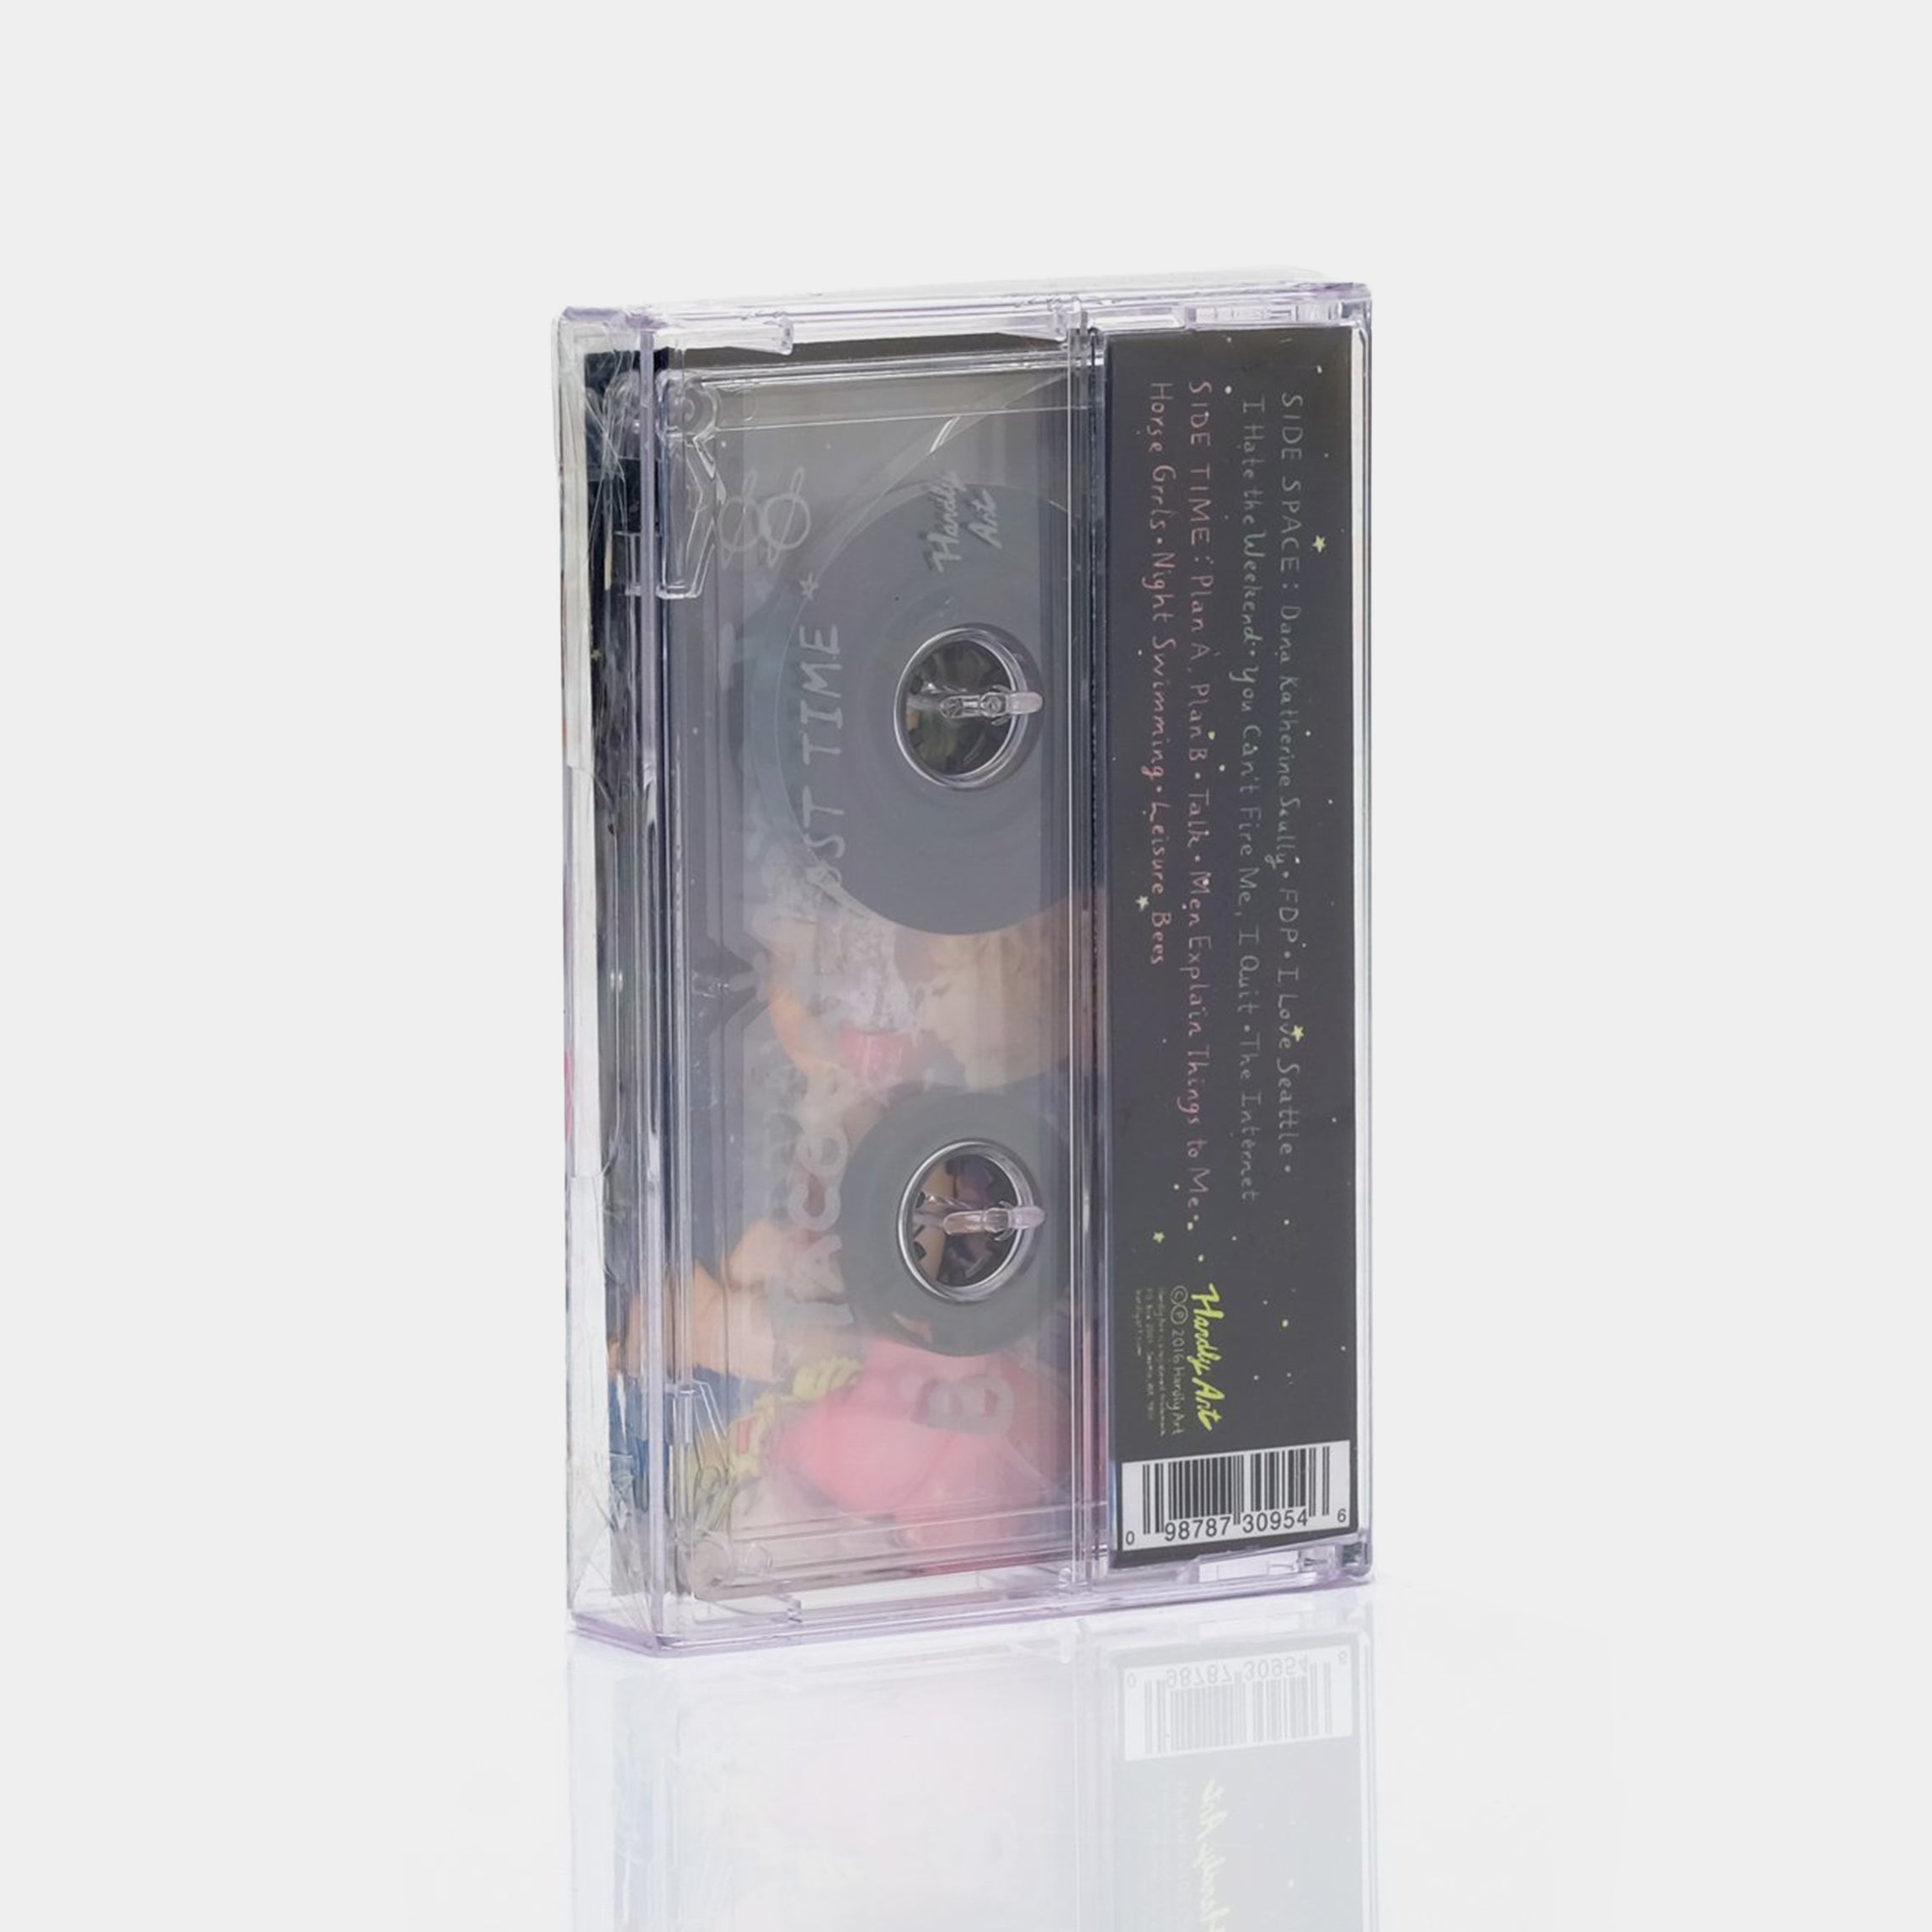 Tacocat - Lost Time Cassette Tape